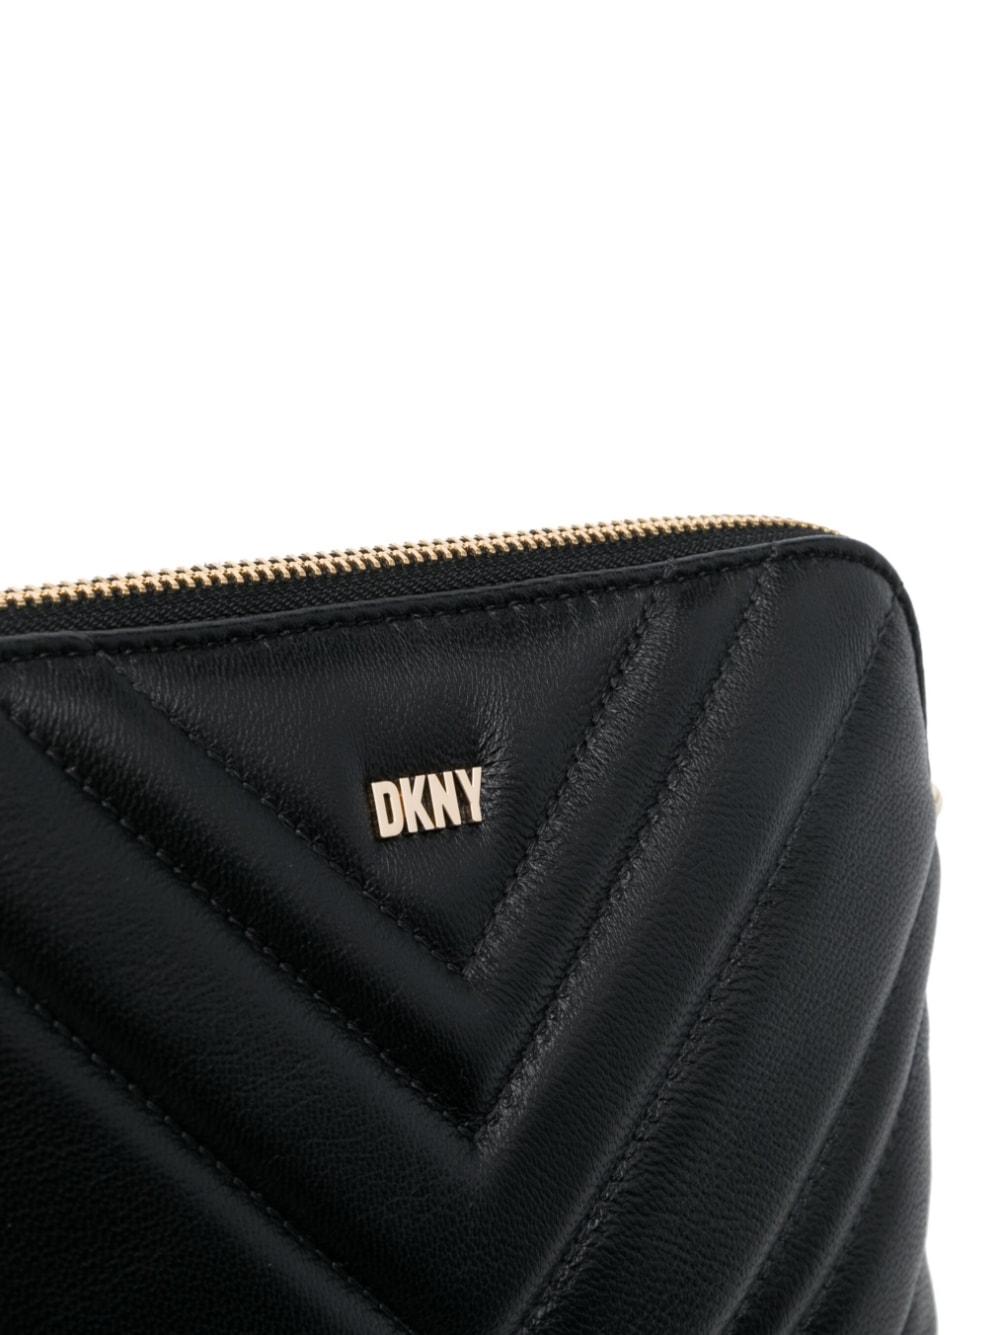 Dkny Women's Sara Camera Bag